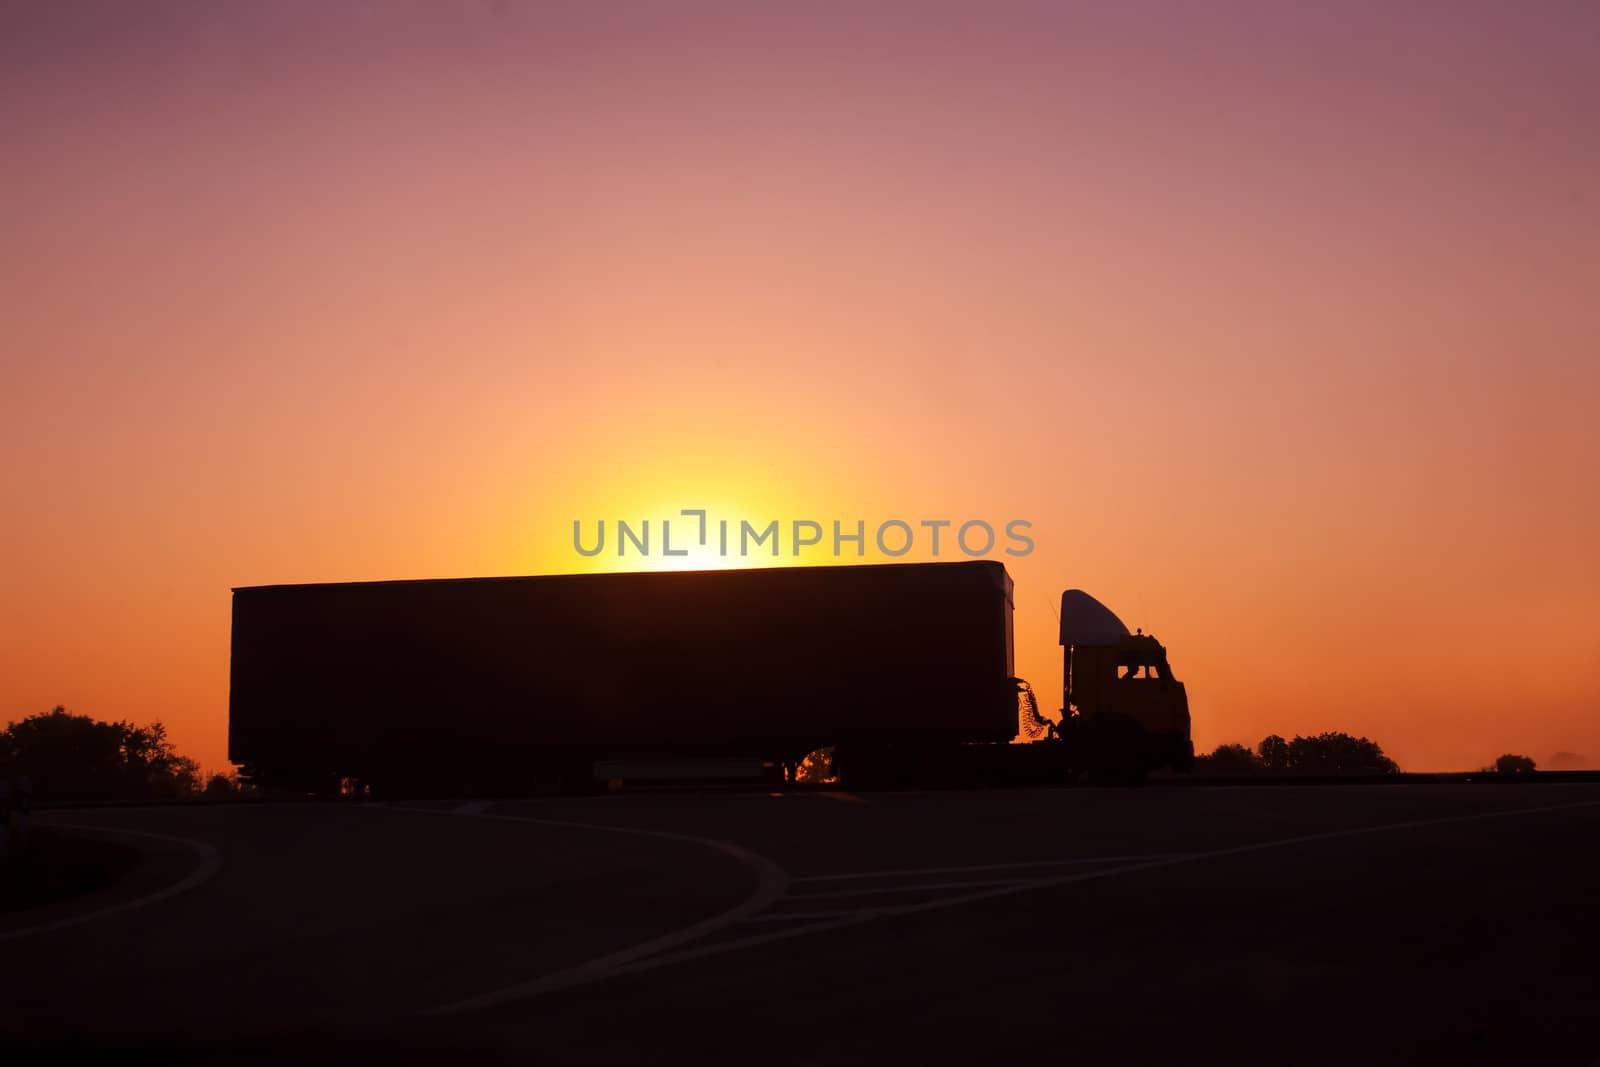 big trailer goes on  motorway against sunset